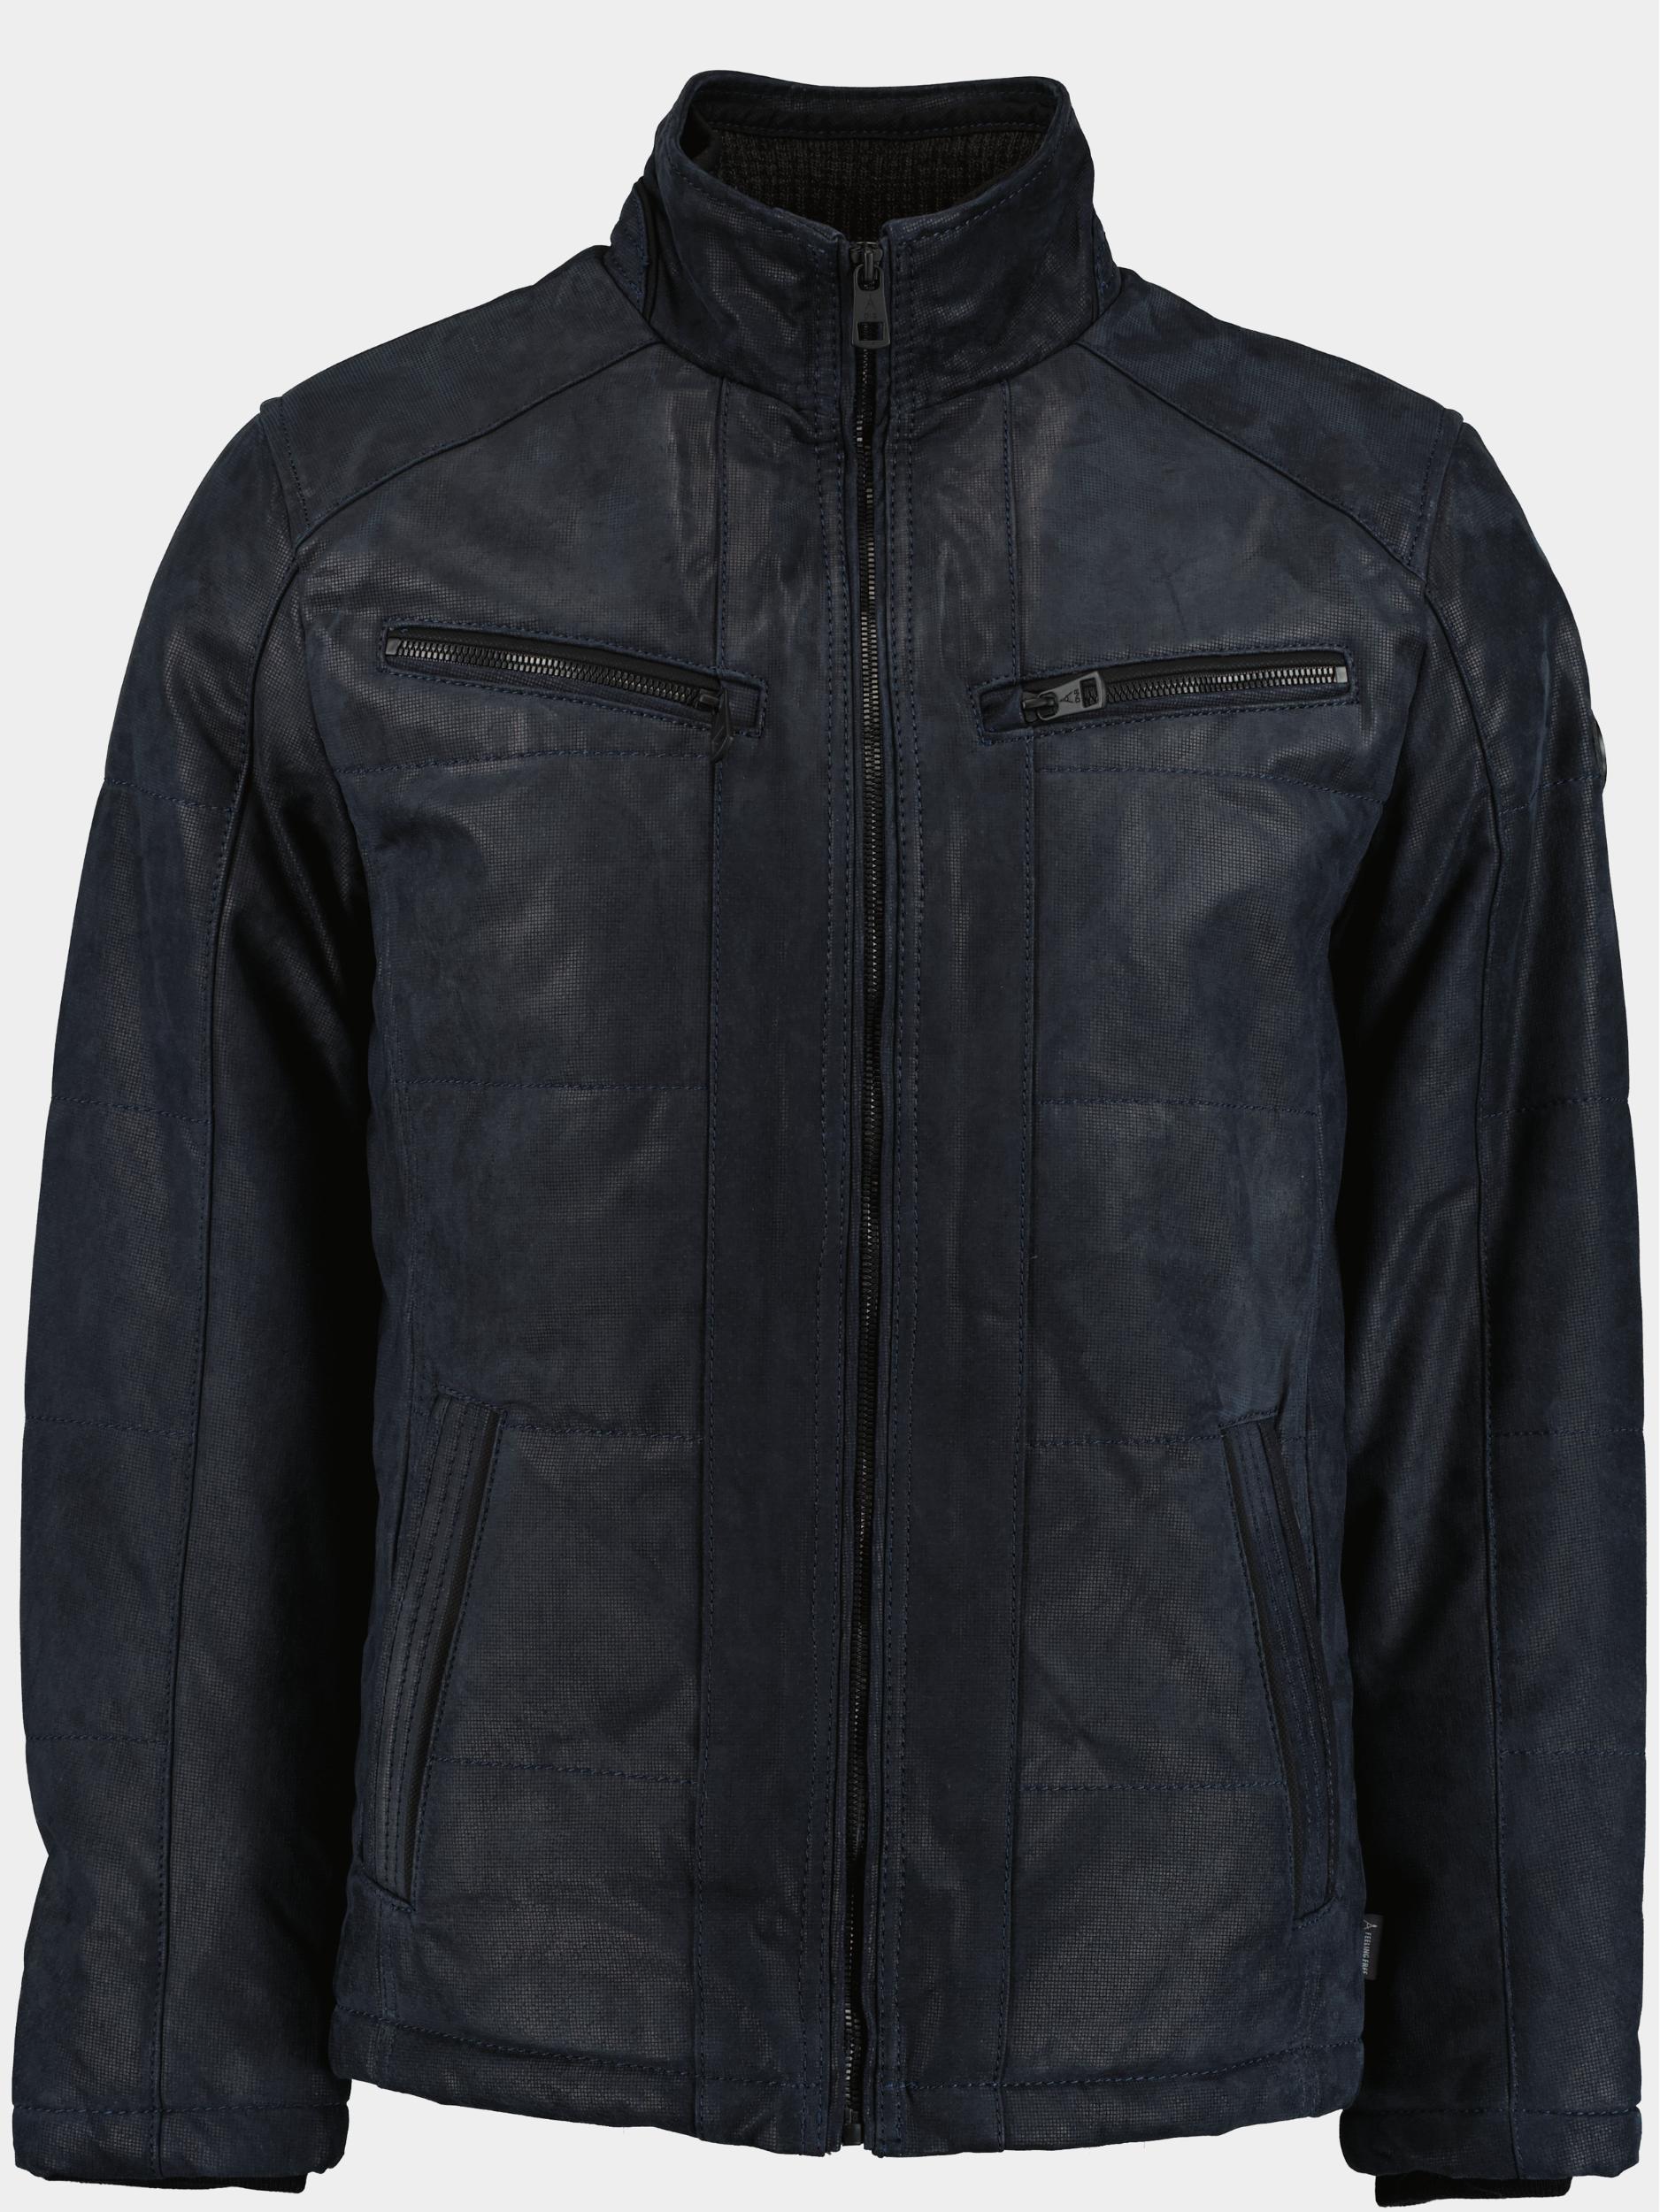 Afbeelding van DNR Lederen jack leather jacket 42770/880